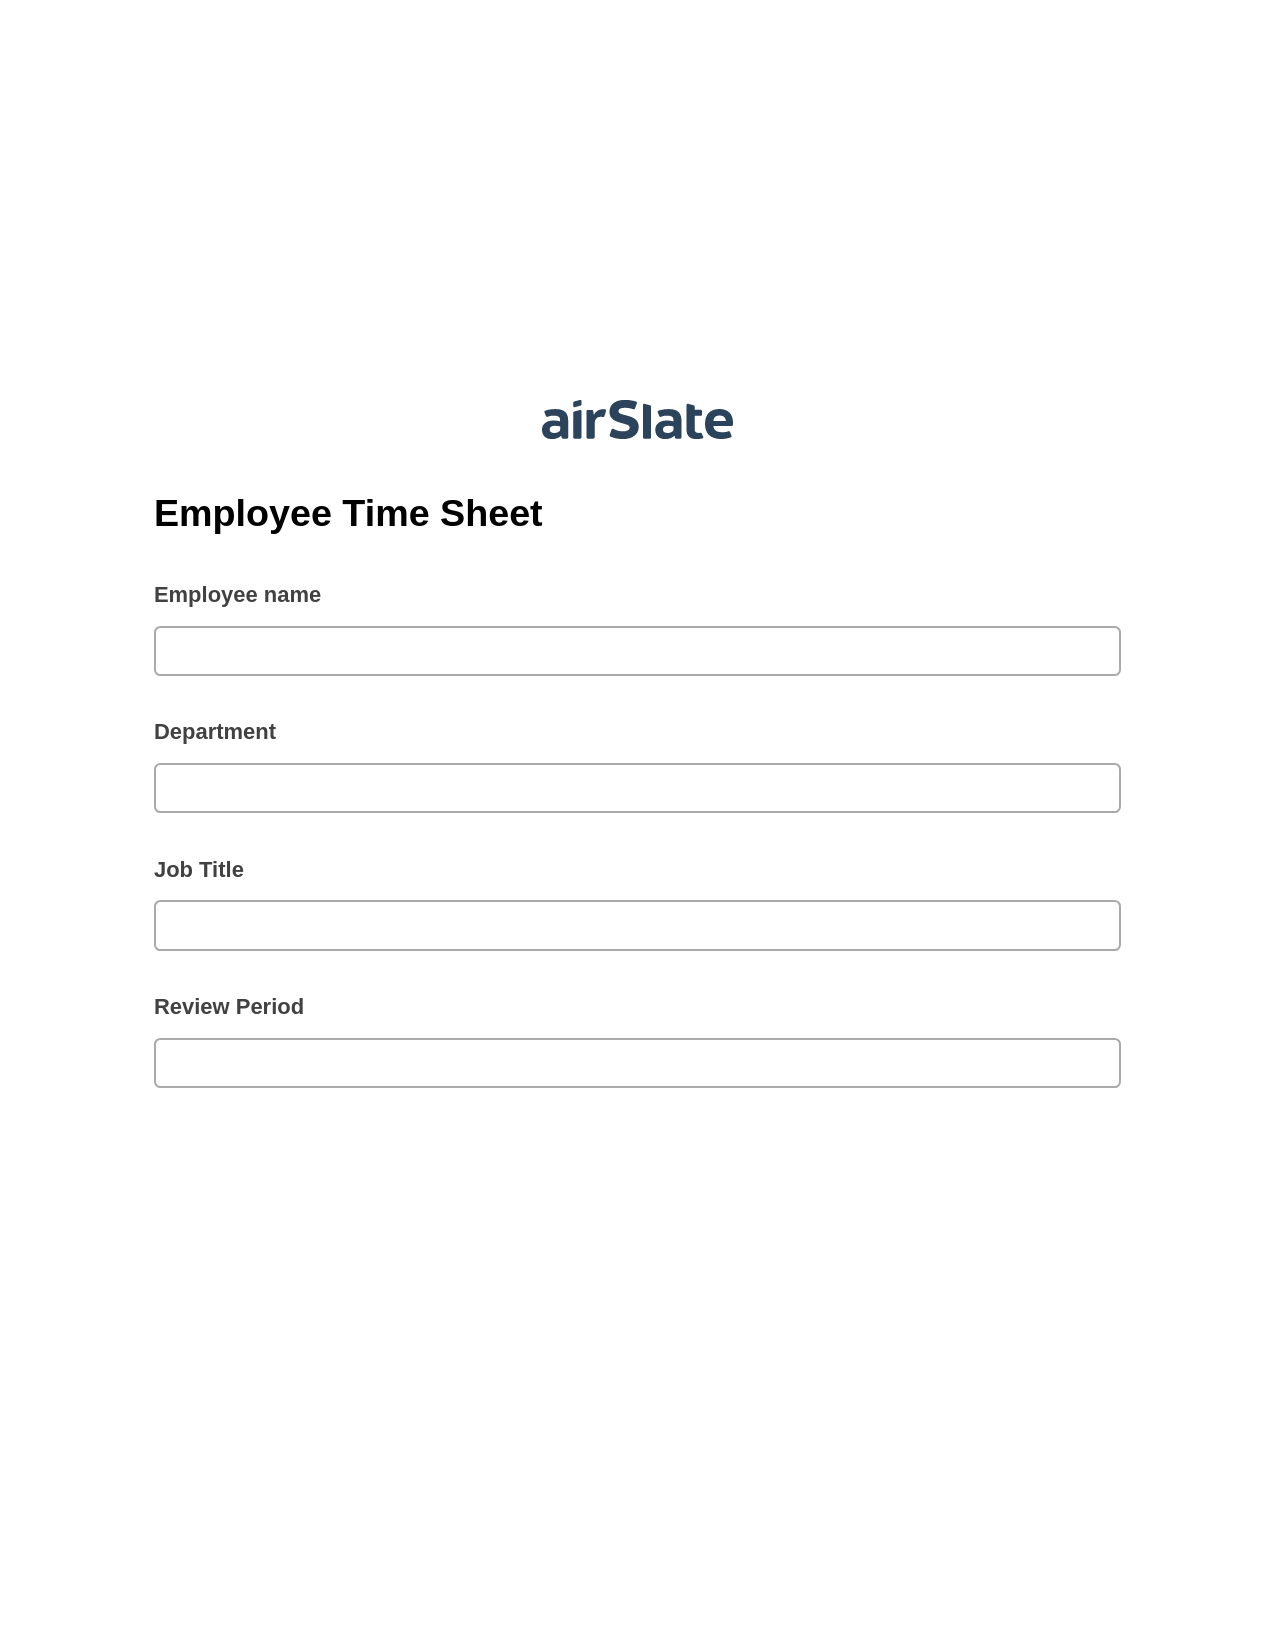 Multirole Employee Time Sheet Pre-fill from Excel Spreadsheet Bot, Update Audit Trail Bot, Slack Notification Postfinish Bot